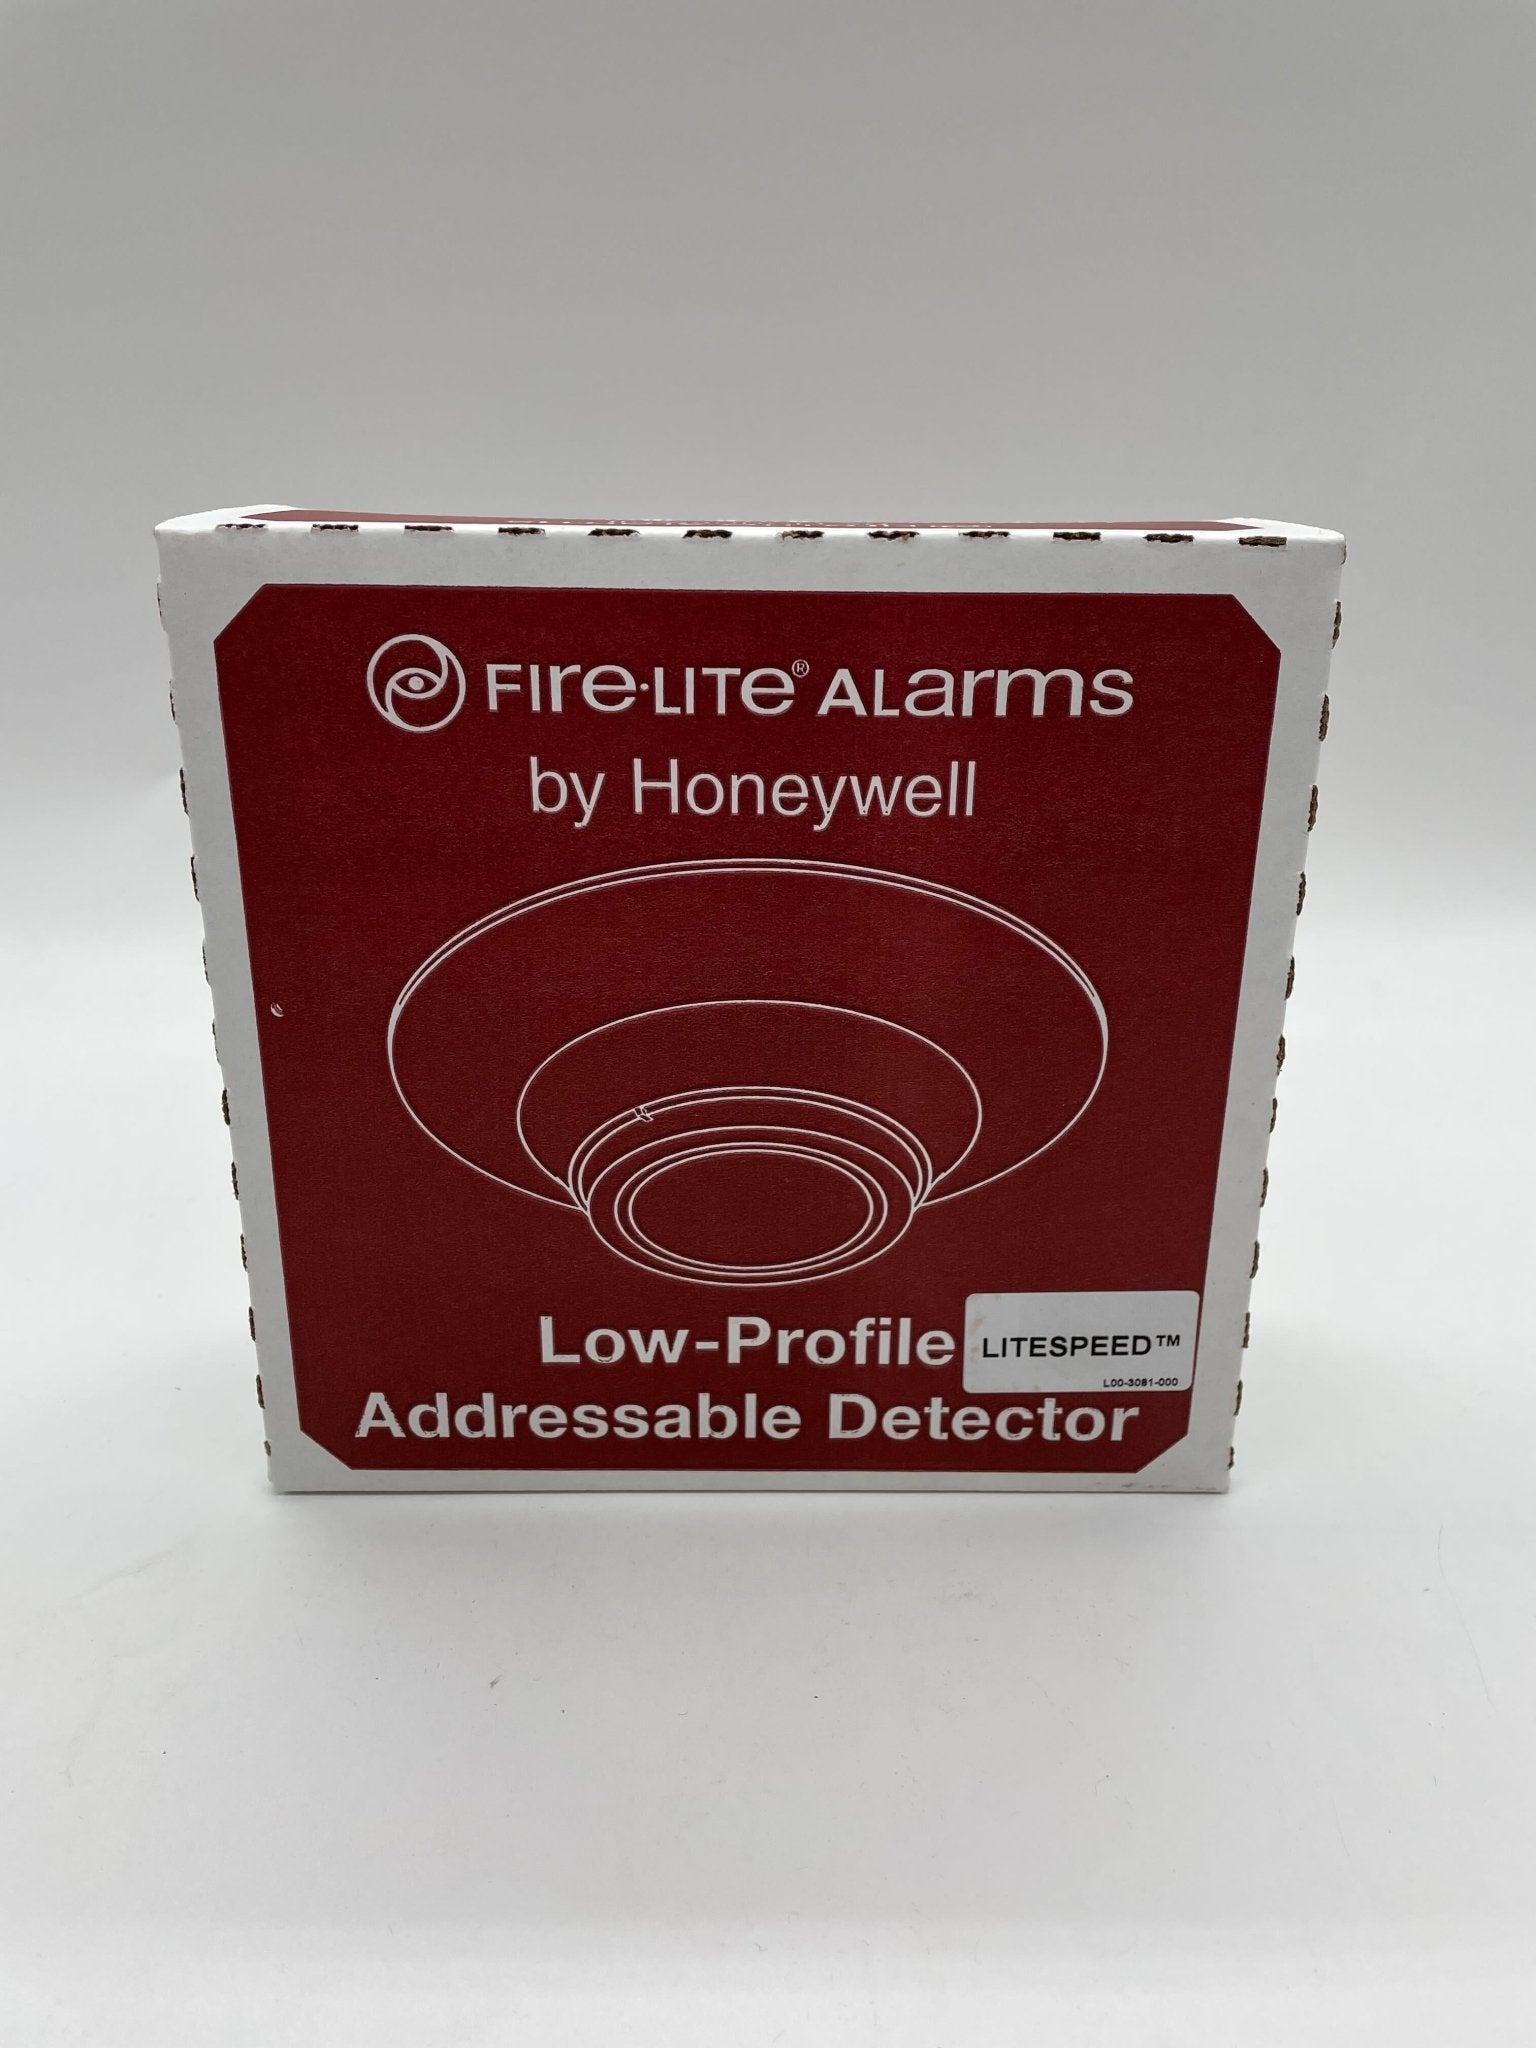 Firelite H365 - The Fire Alarm Supplier